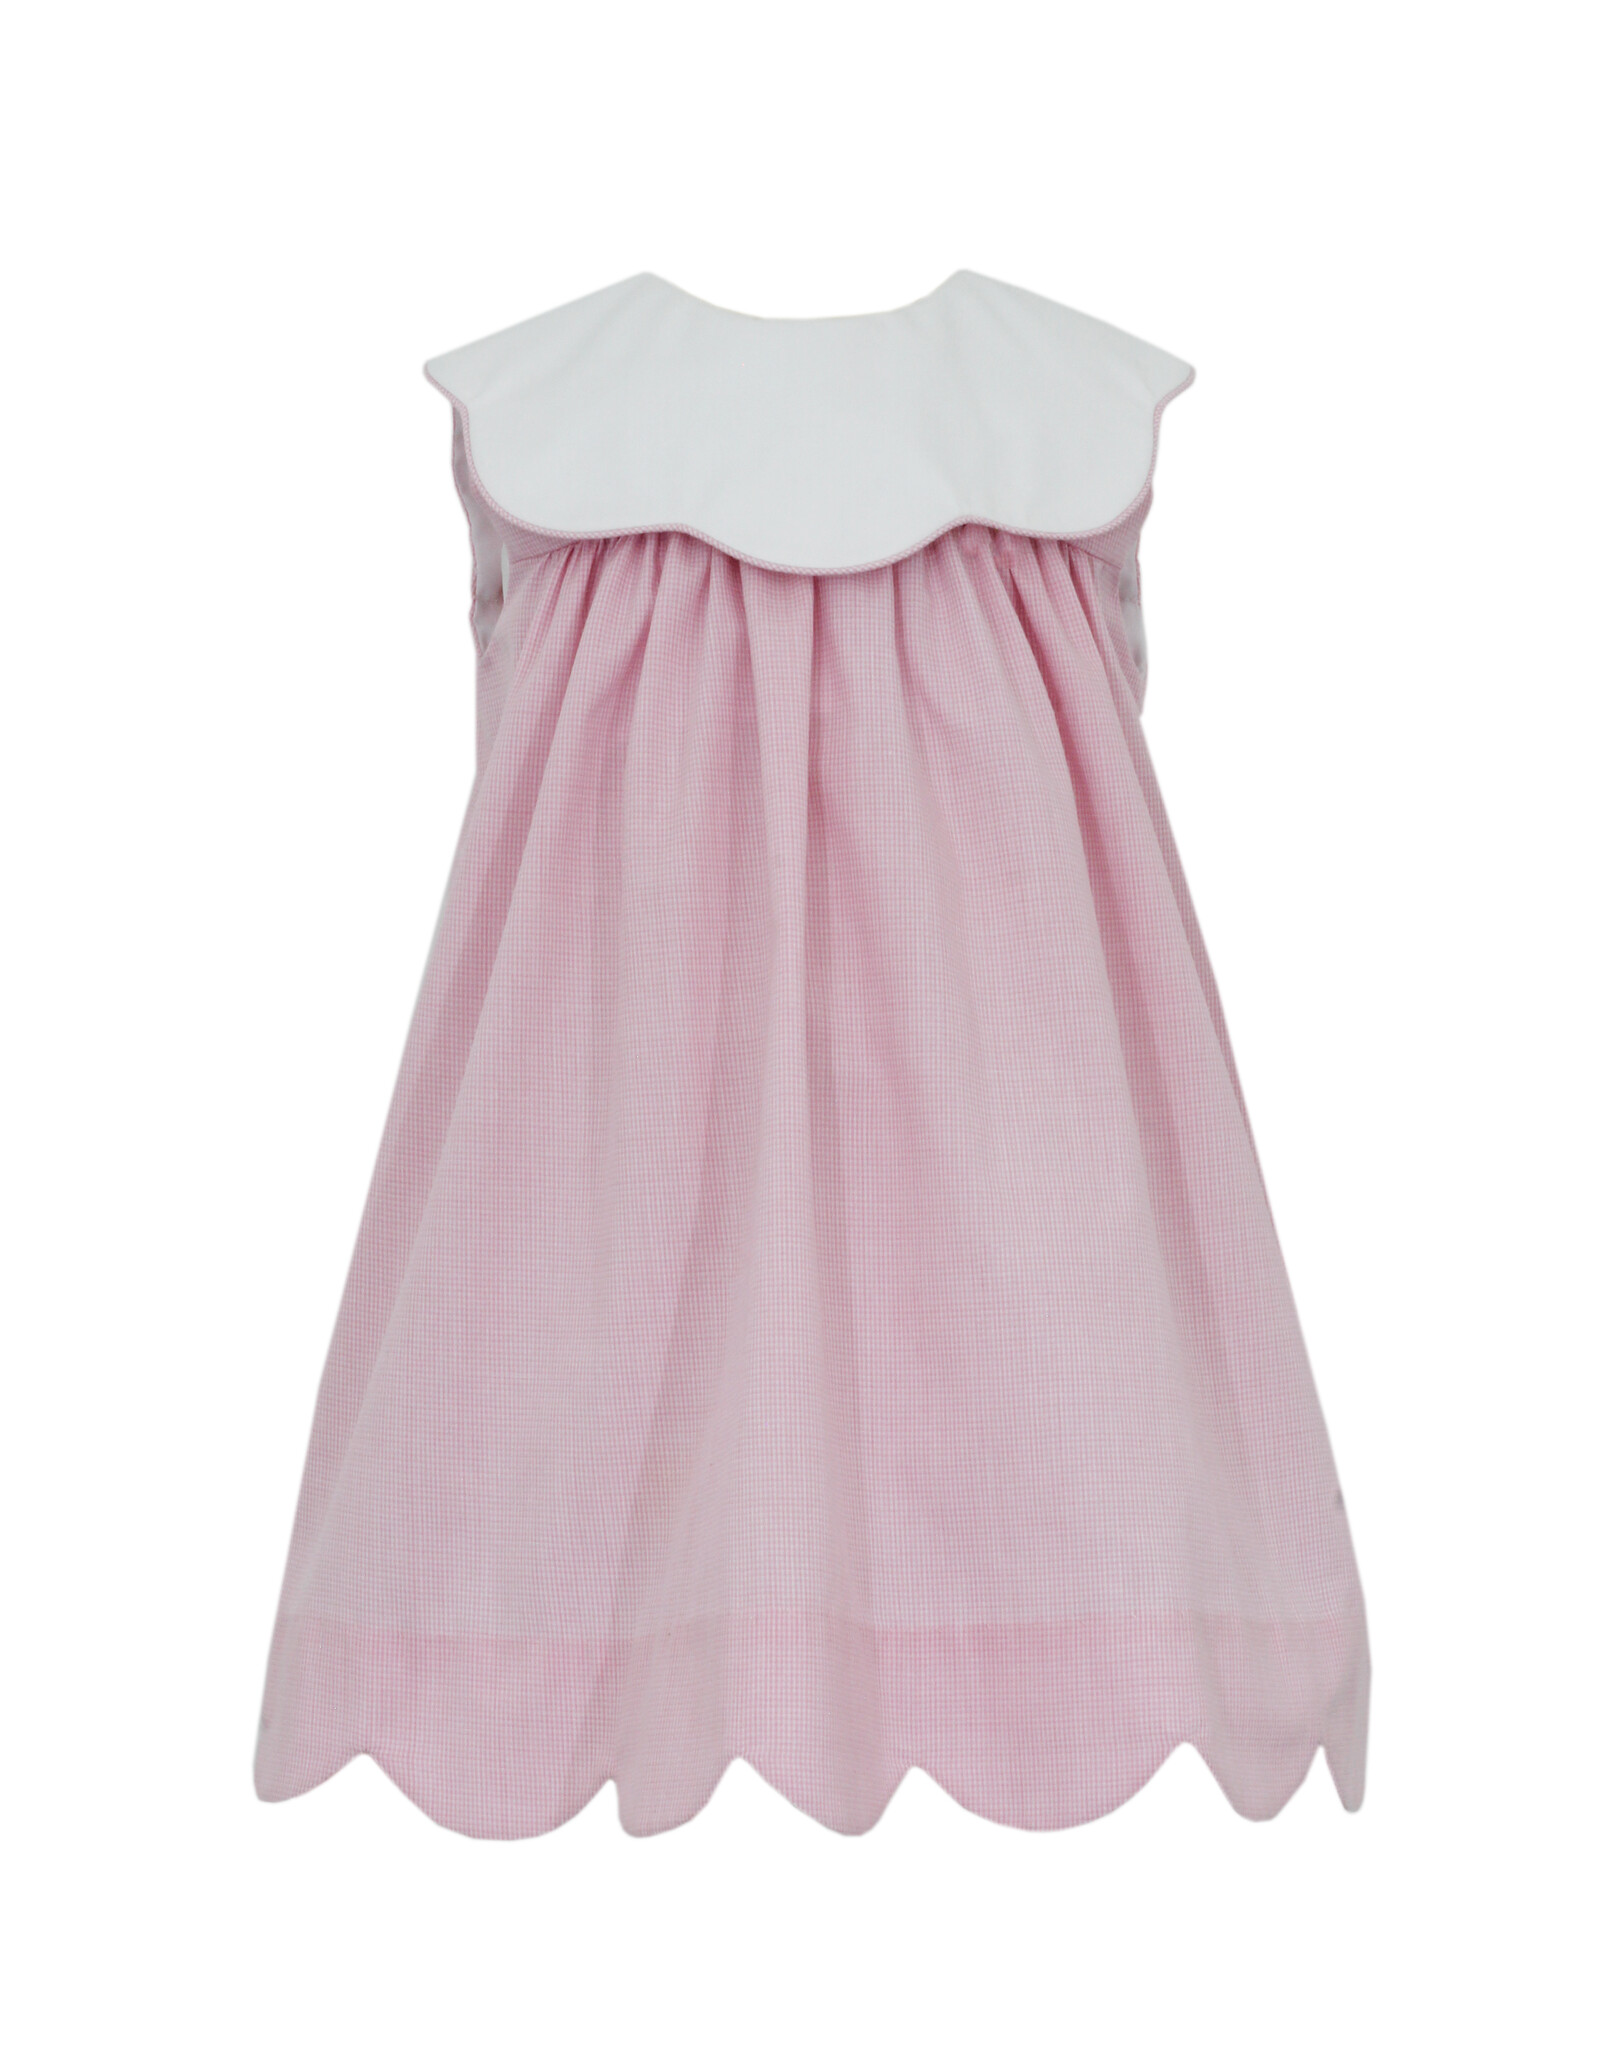 Petit Bebe Pink Microcheck Float Dress w/ Round Collar